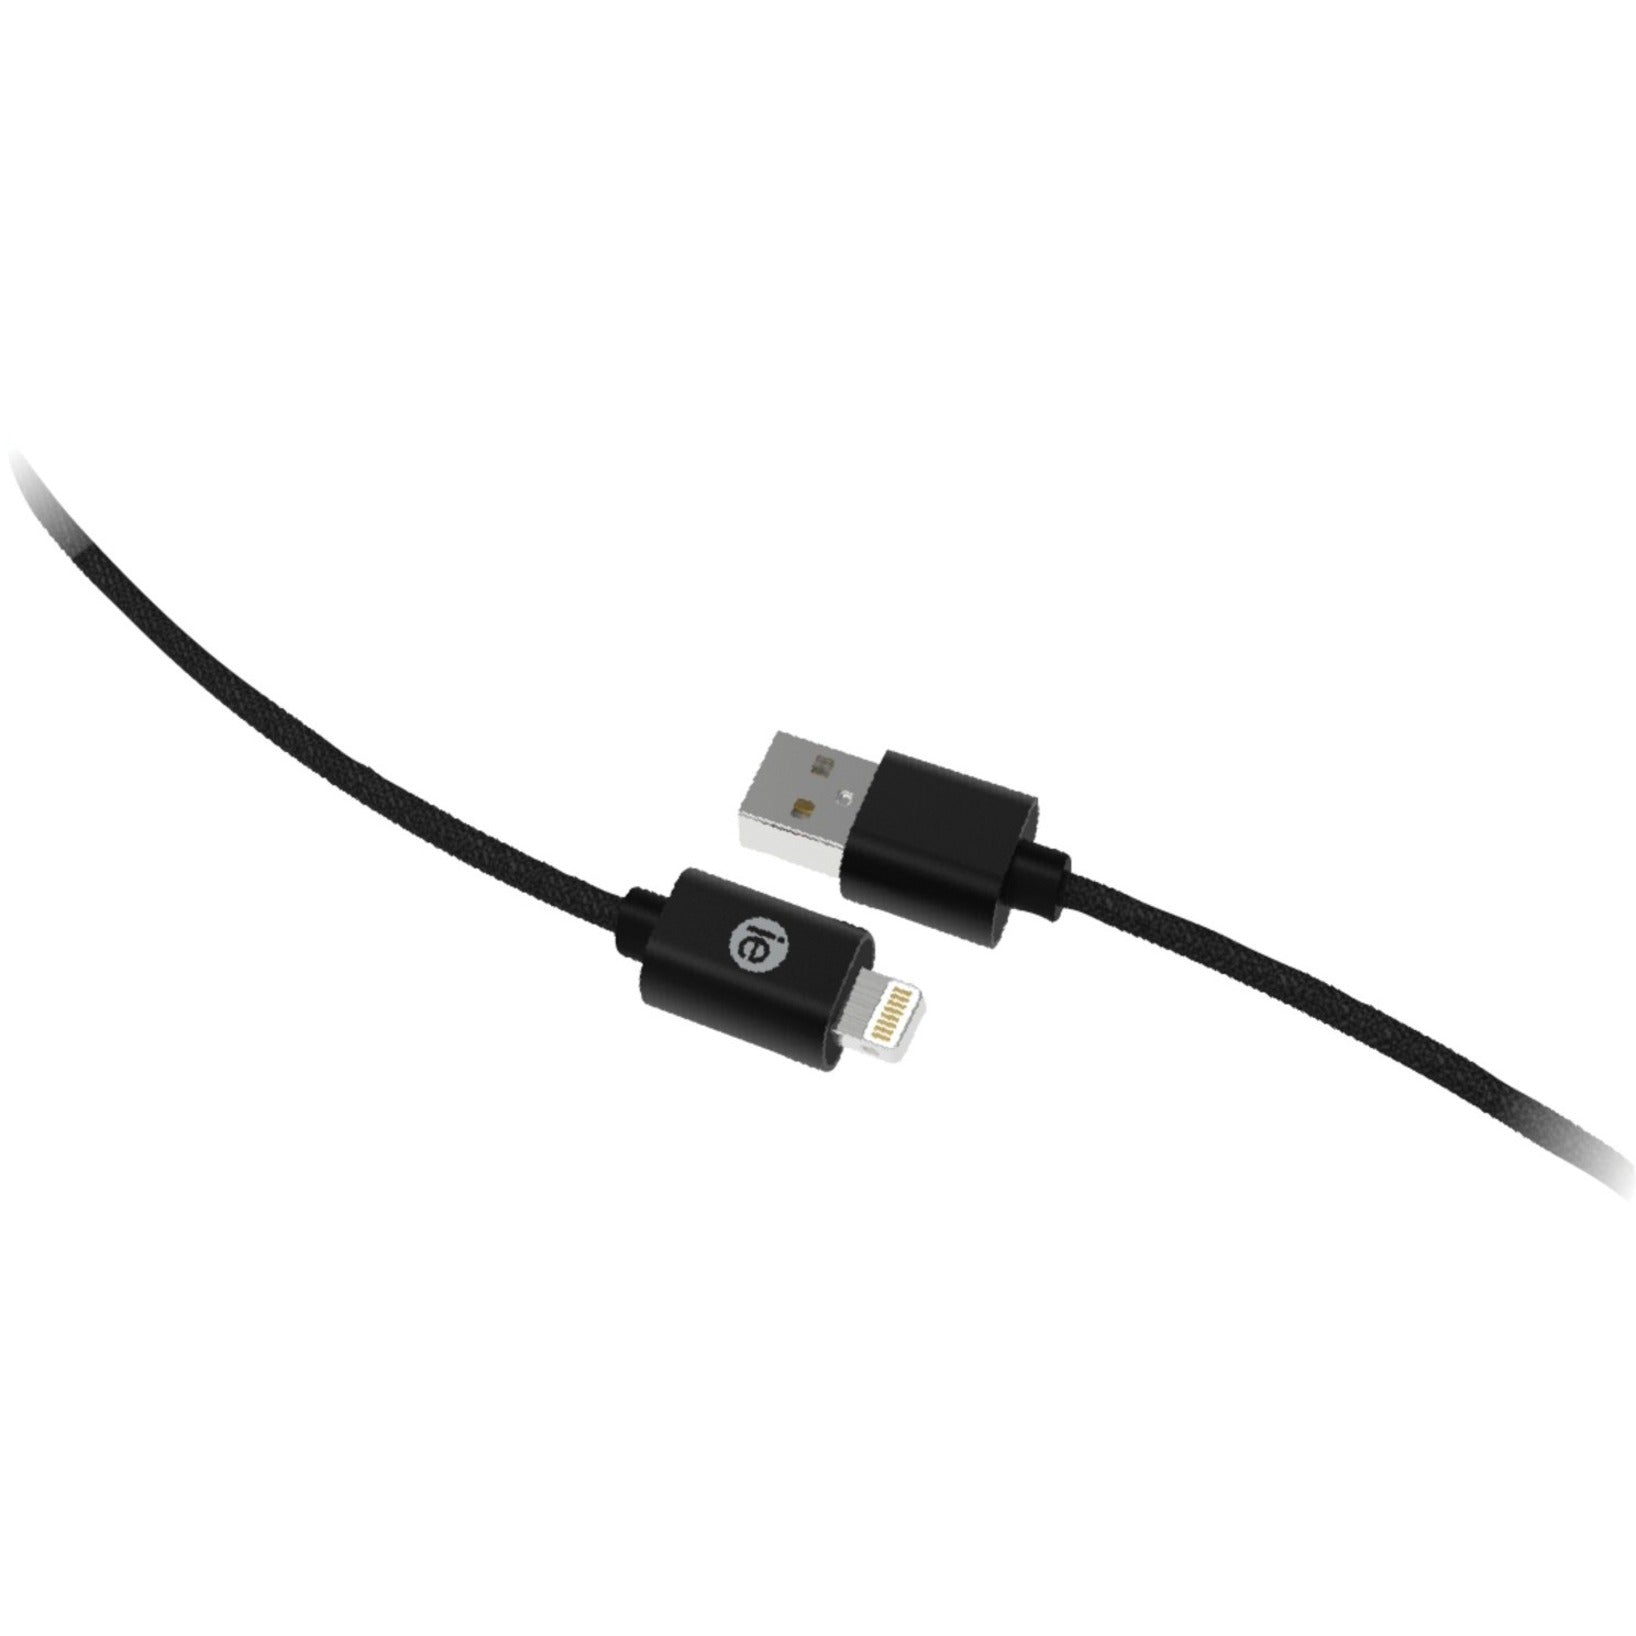 DigiPower IEN-BC10L-BK Lightning/USB Data Transfer Cable, 10 ft, Charging, Tangle-free, Black